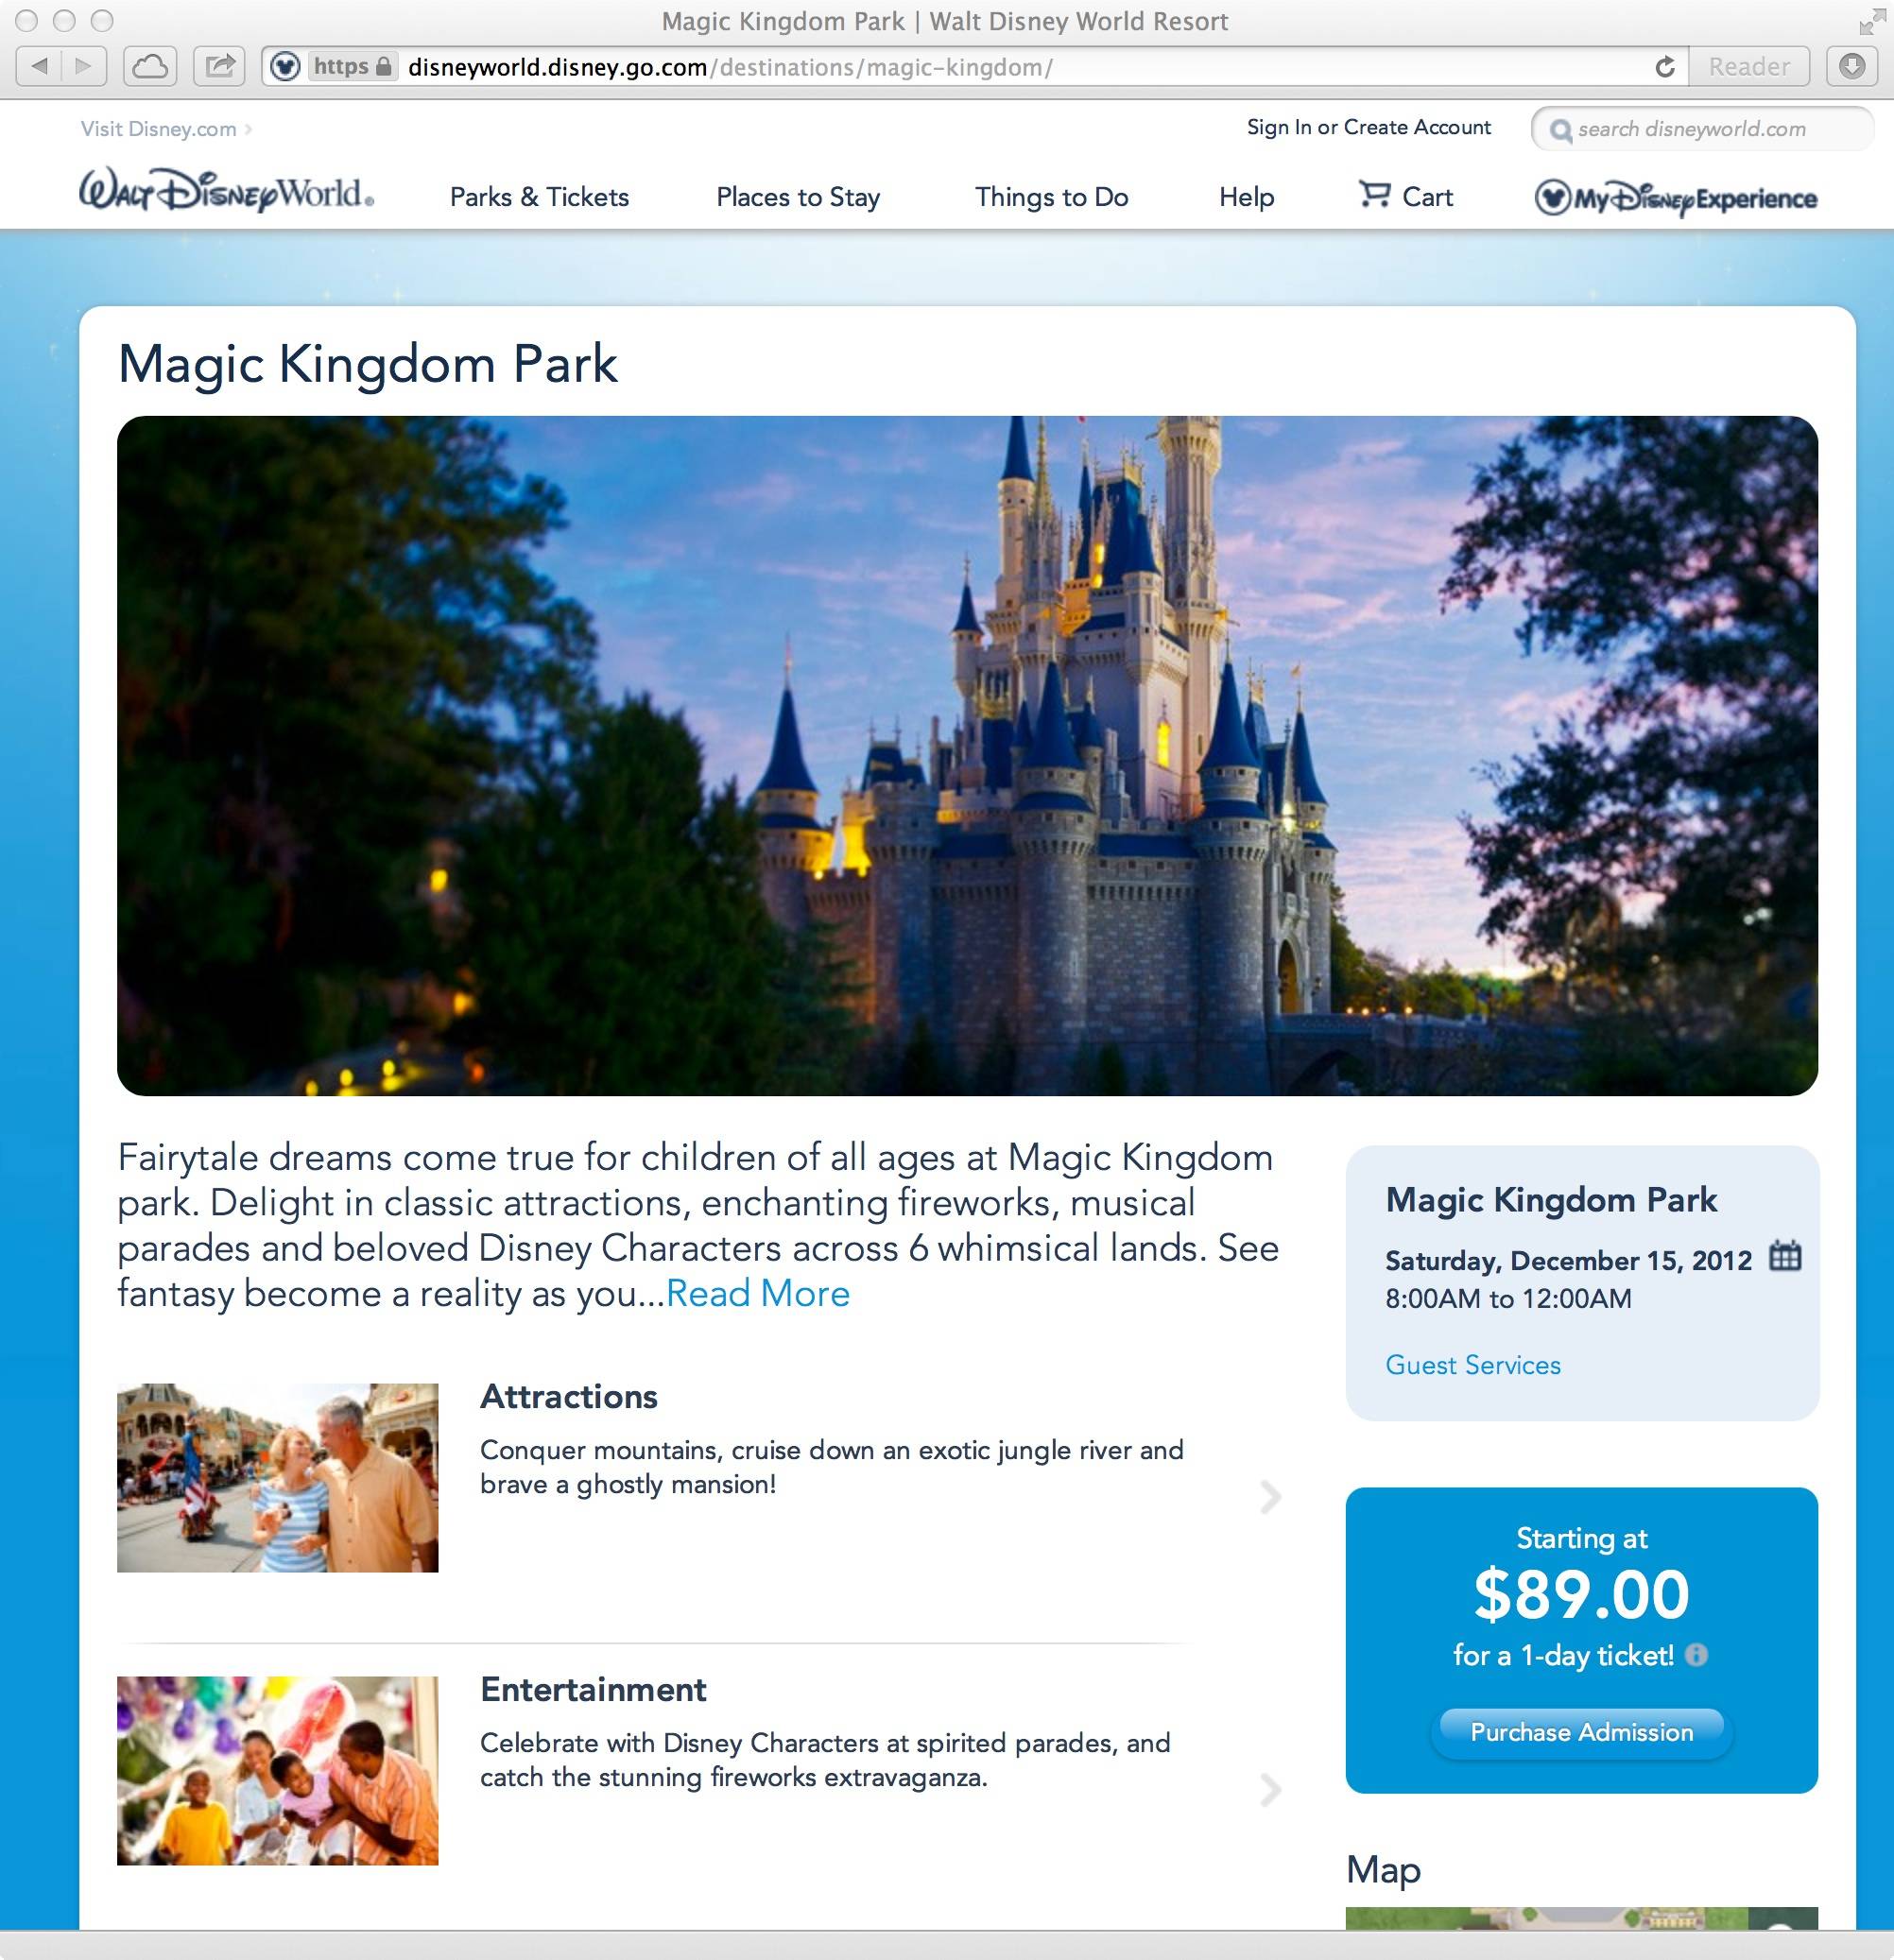 New official Walt DIsney World website - Magic Kingdom